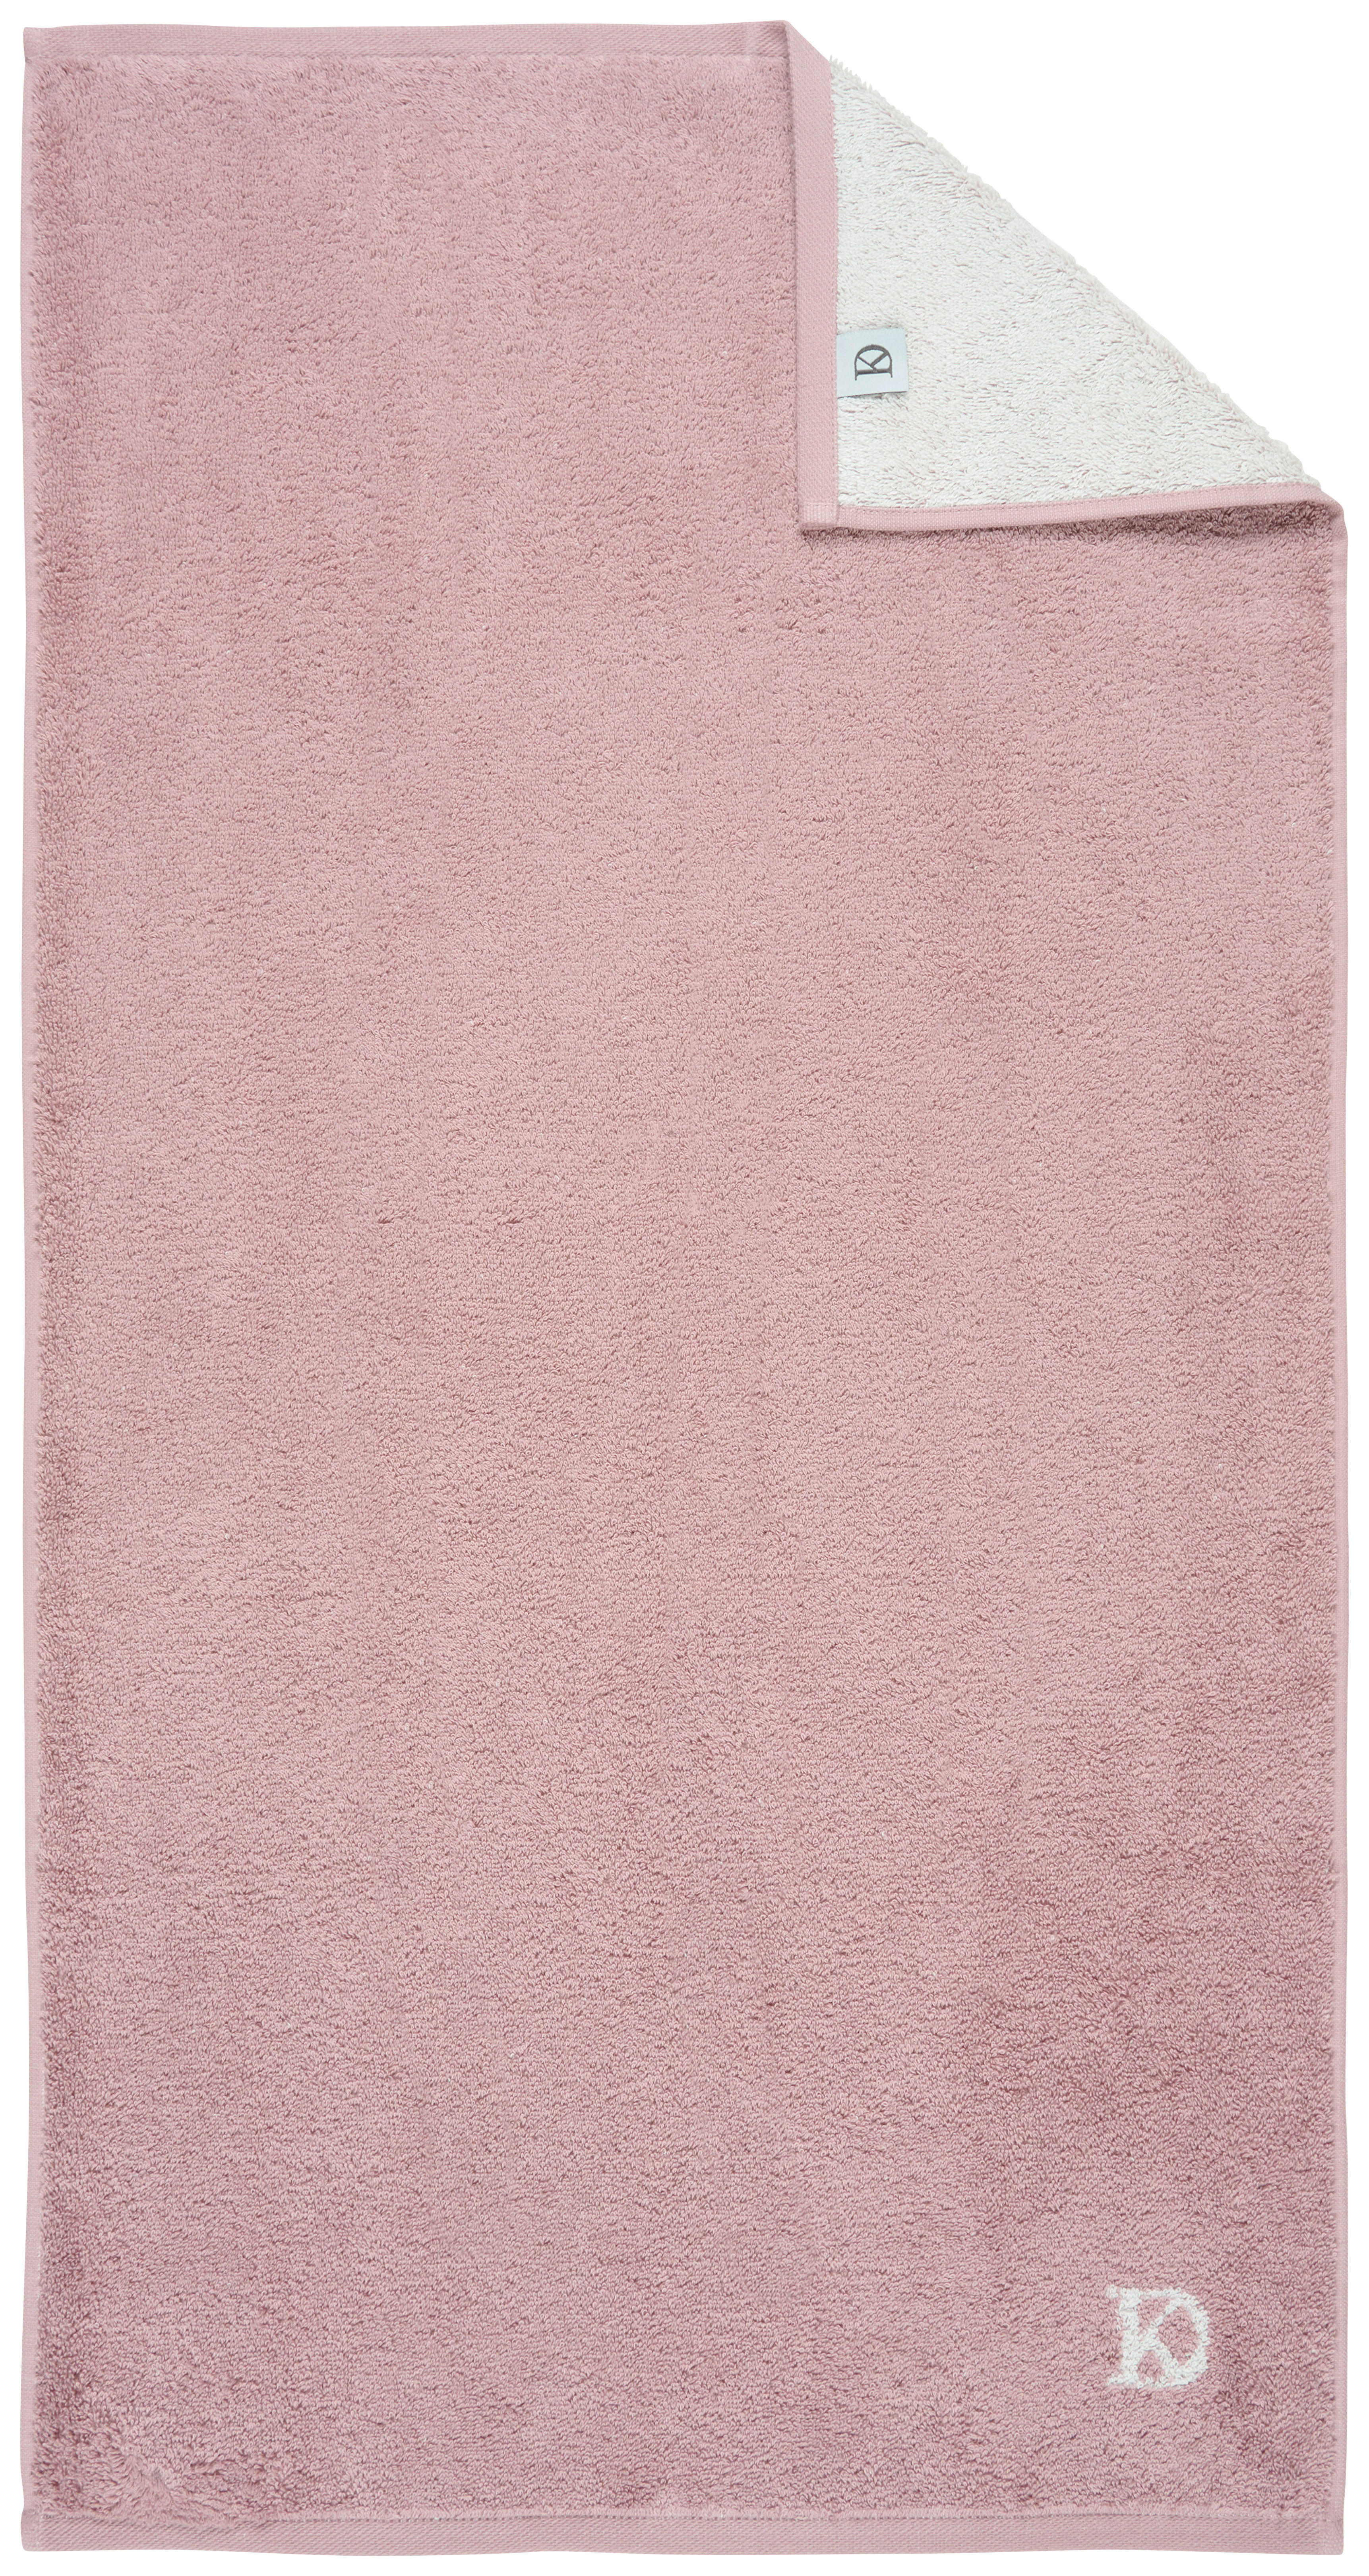 HANDTUCH BASIC  - Rosa/Grau, Design, Textil (50/100cm) - Dieter Knoll